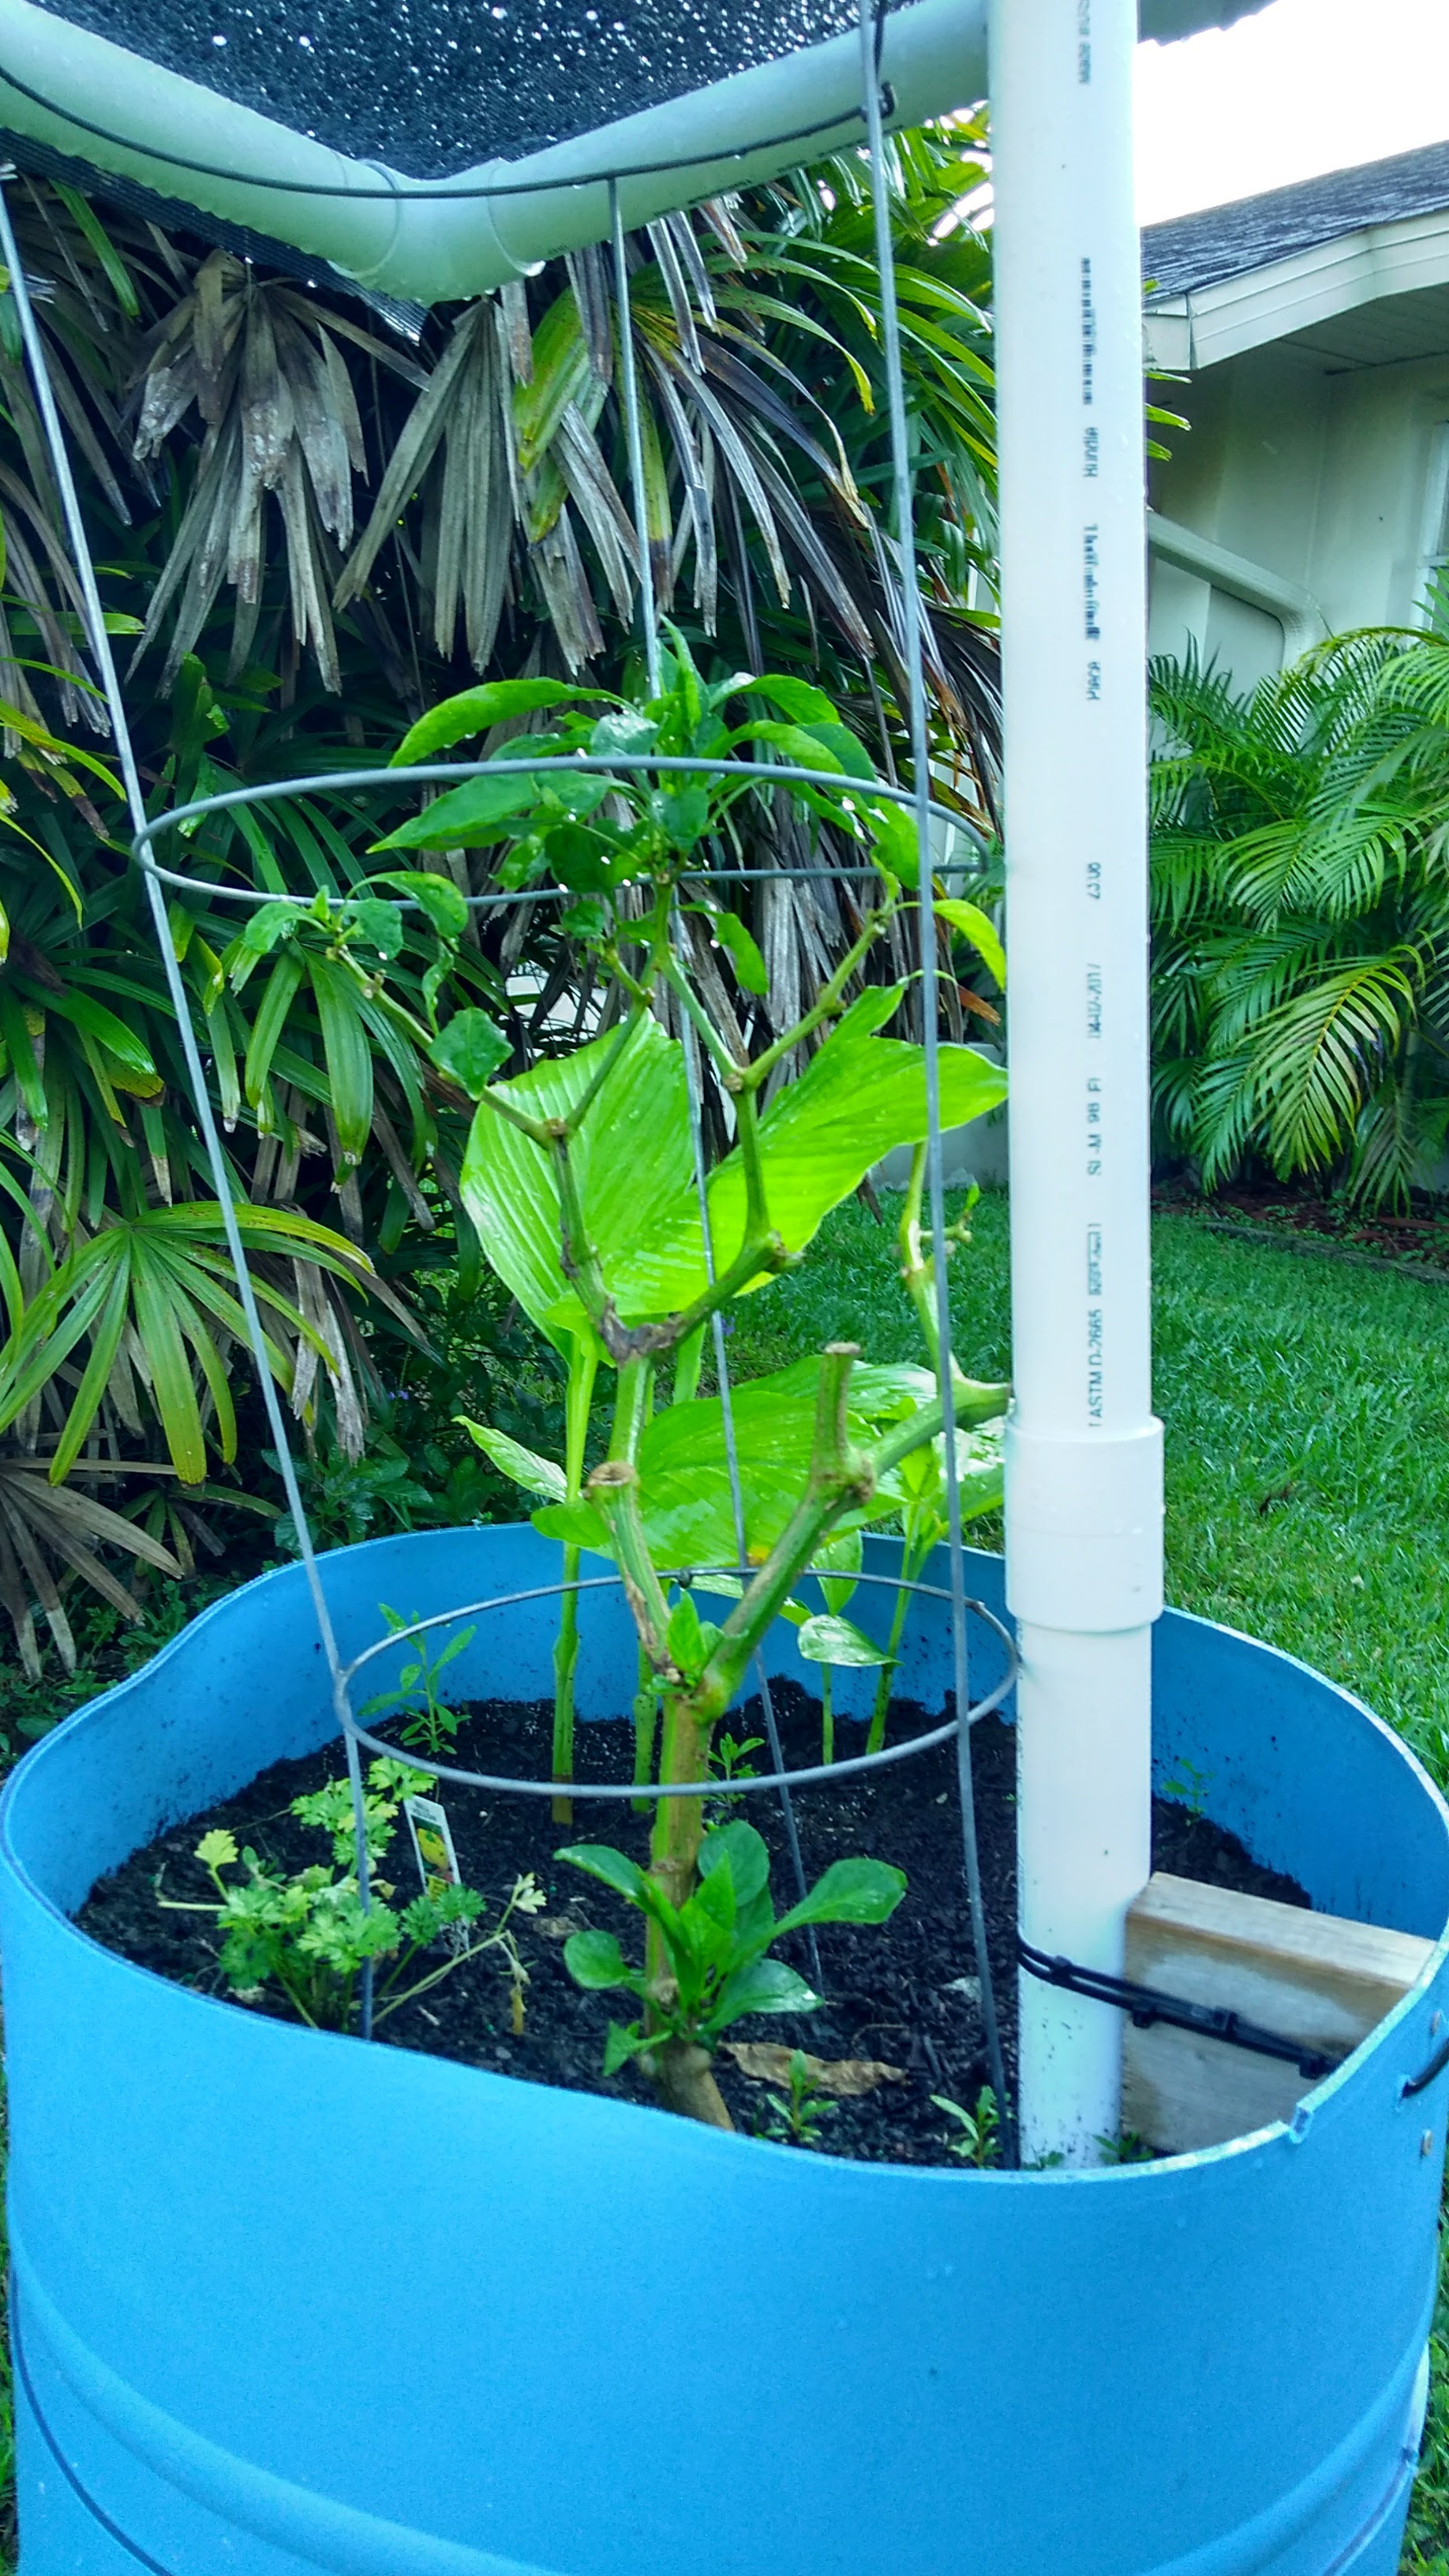 Pepper plant